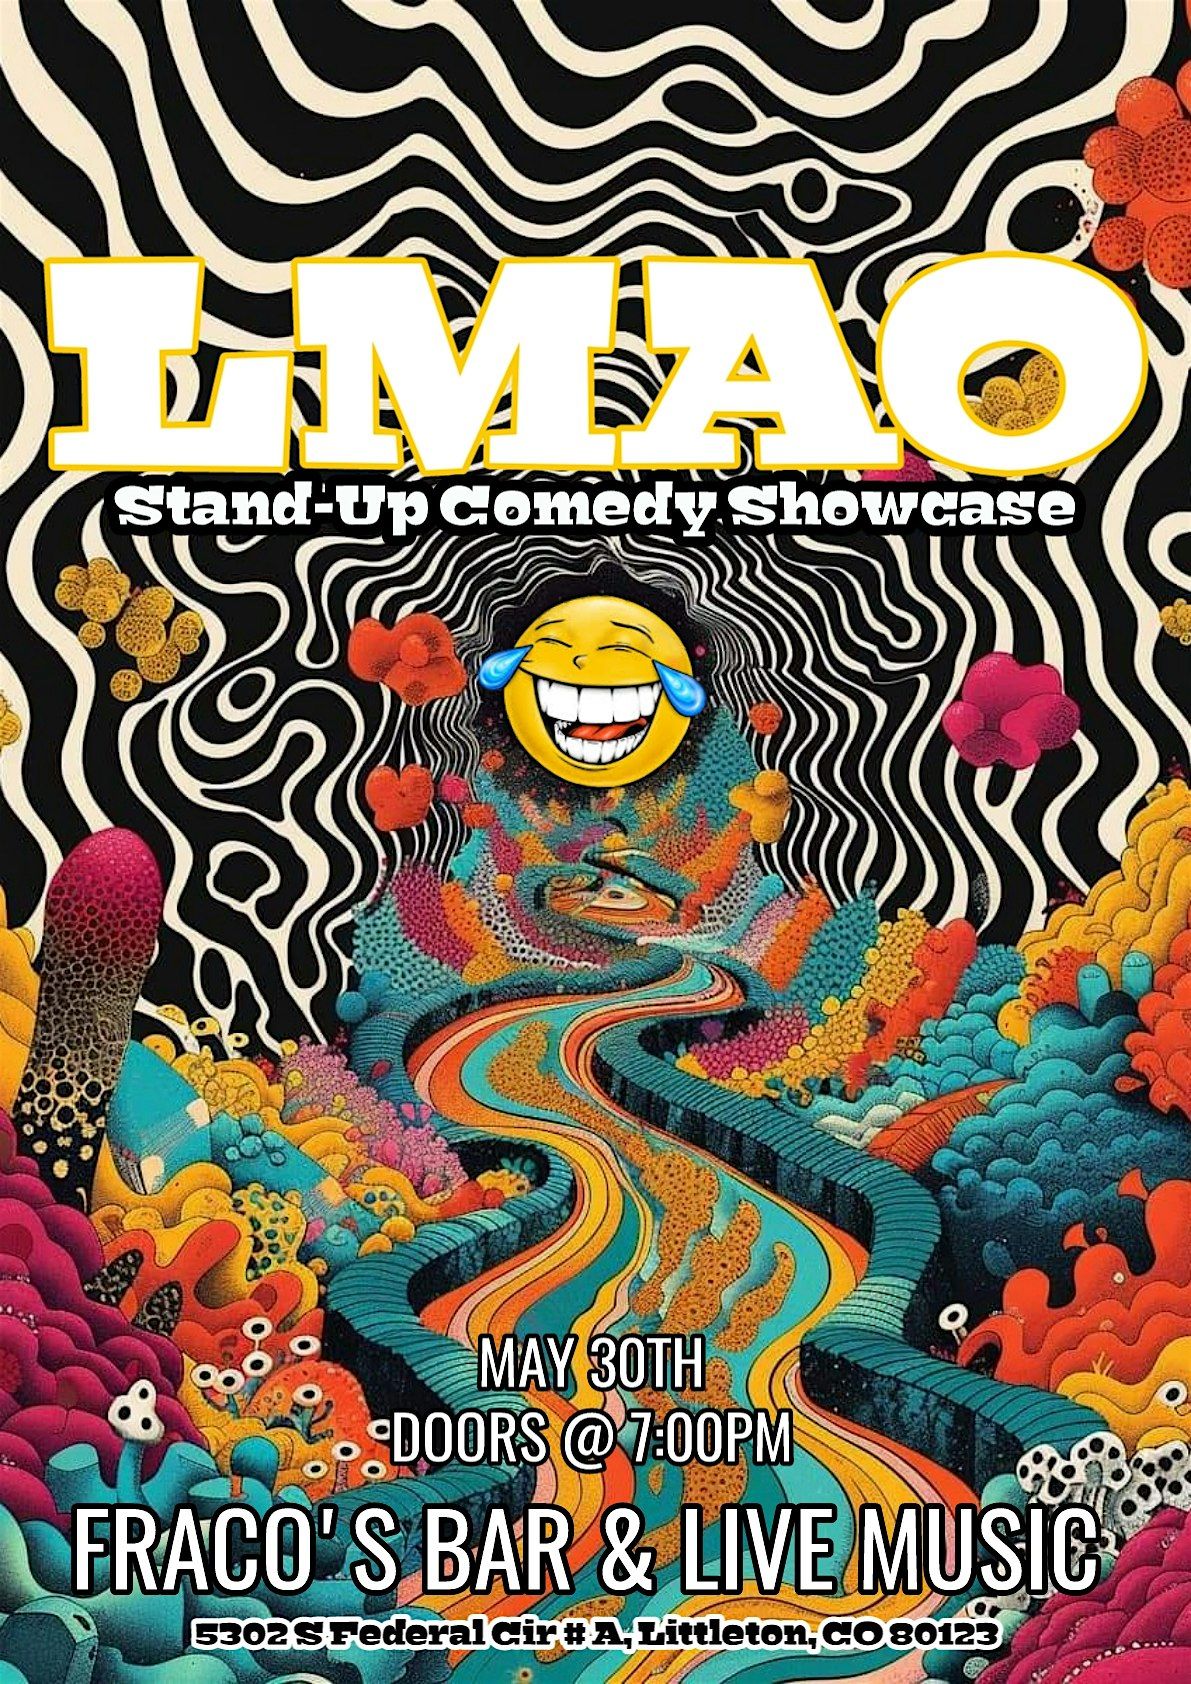 LMAO Stand-Up Comedy Showcase